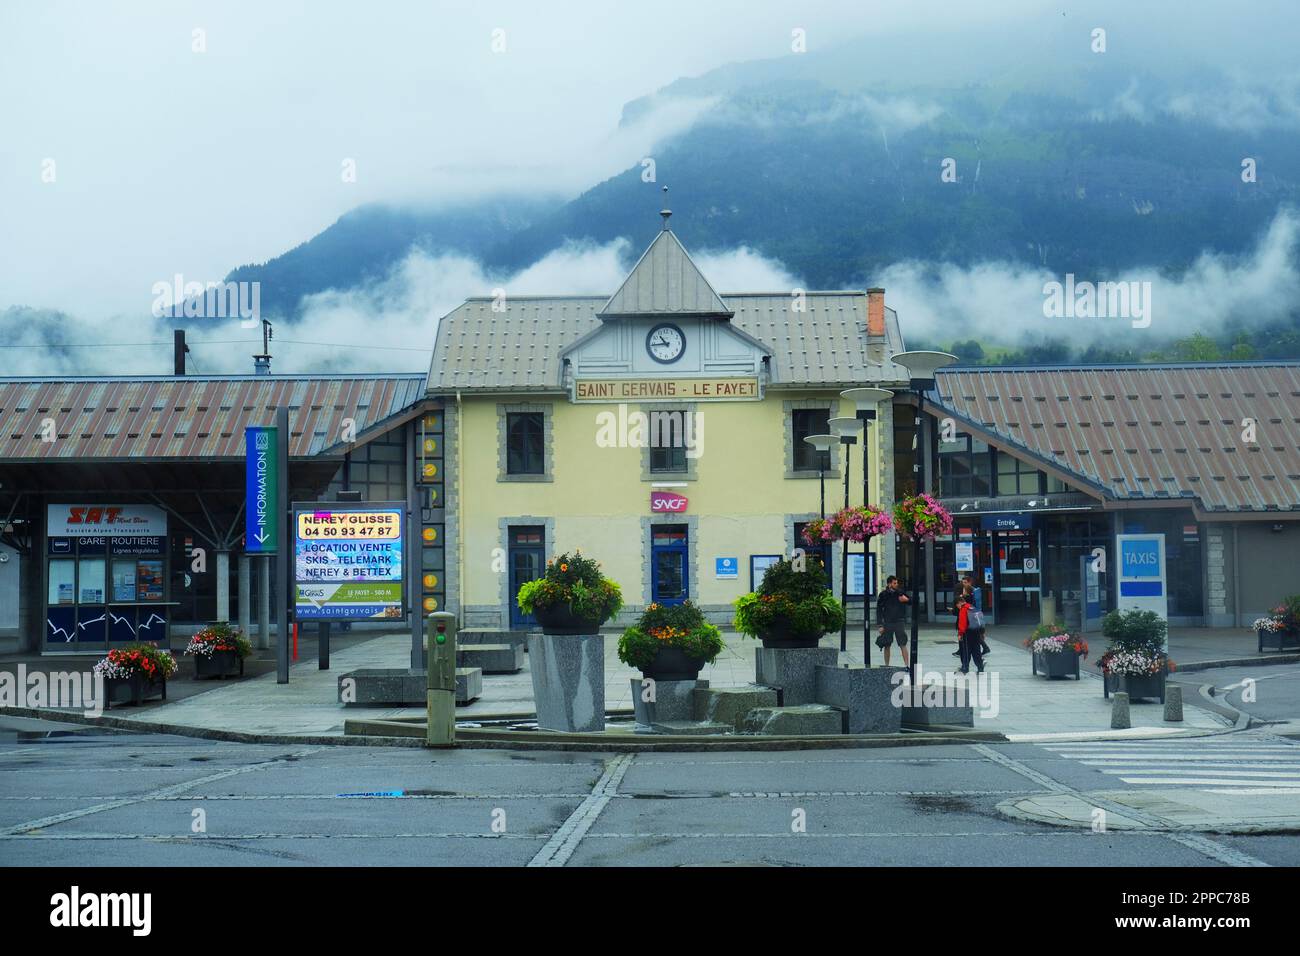 Saint-Gervais, Chamonix, France - July 15, 2021. Saint-Gervais - Le Fayet railway station for the Tramway du Mont Blanc, who reach the Nid d'Aigle Stock Photo